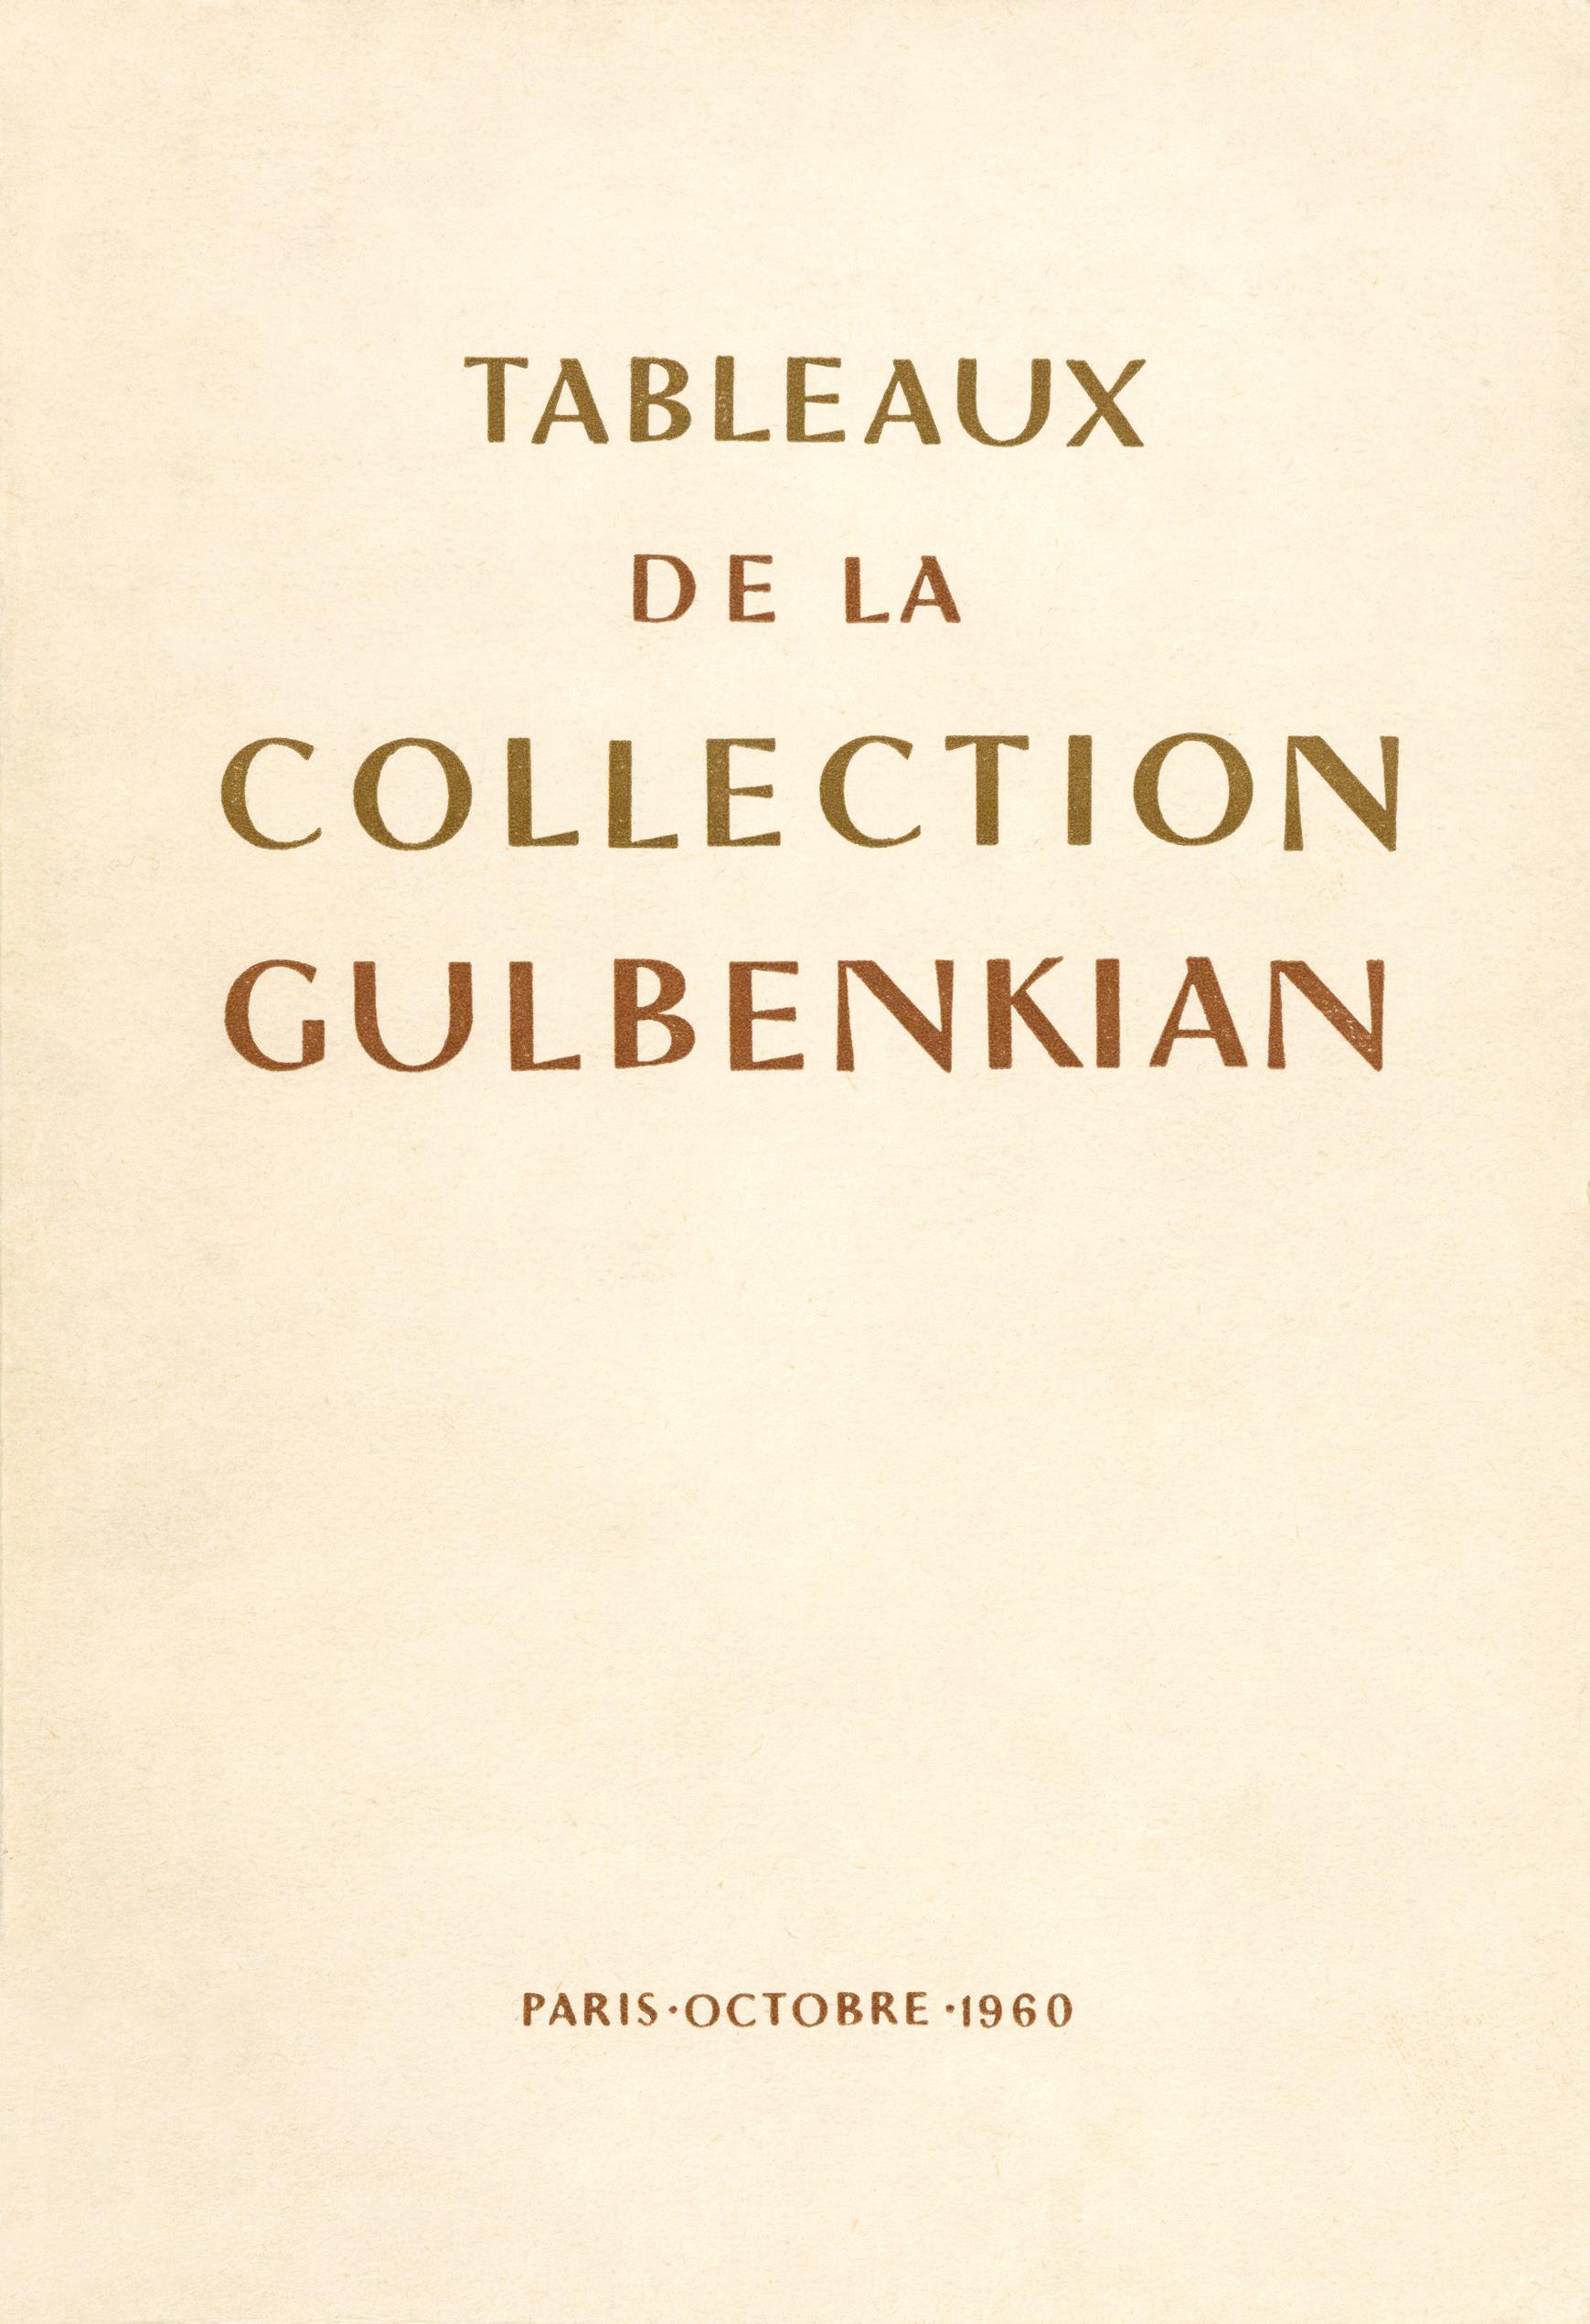 1960_Tableaux_de_la_Collection_Gulbenkian_catalogo_capa_CL268.2